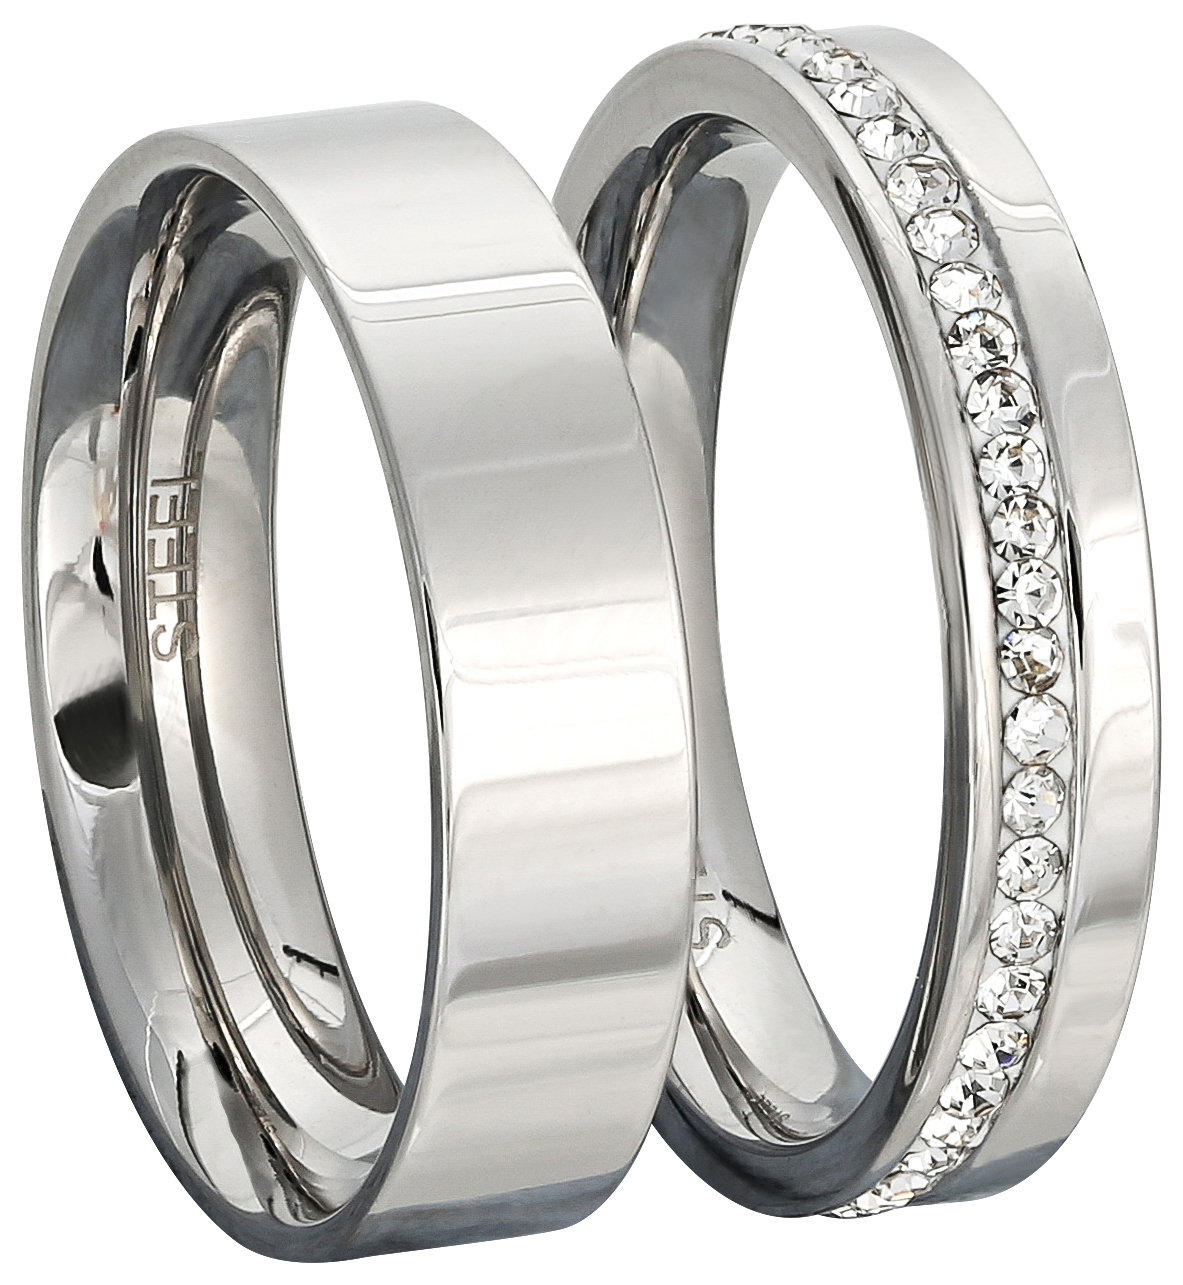 Ring-Set - Silver Beauty